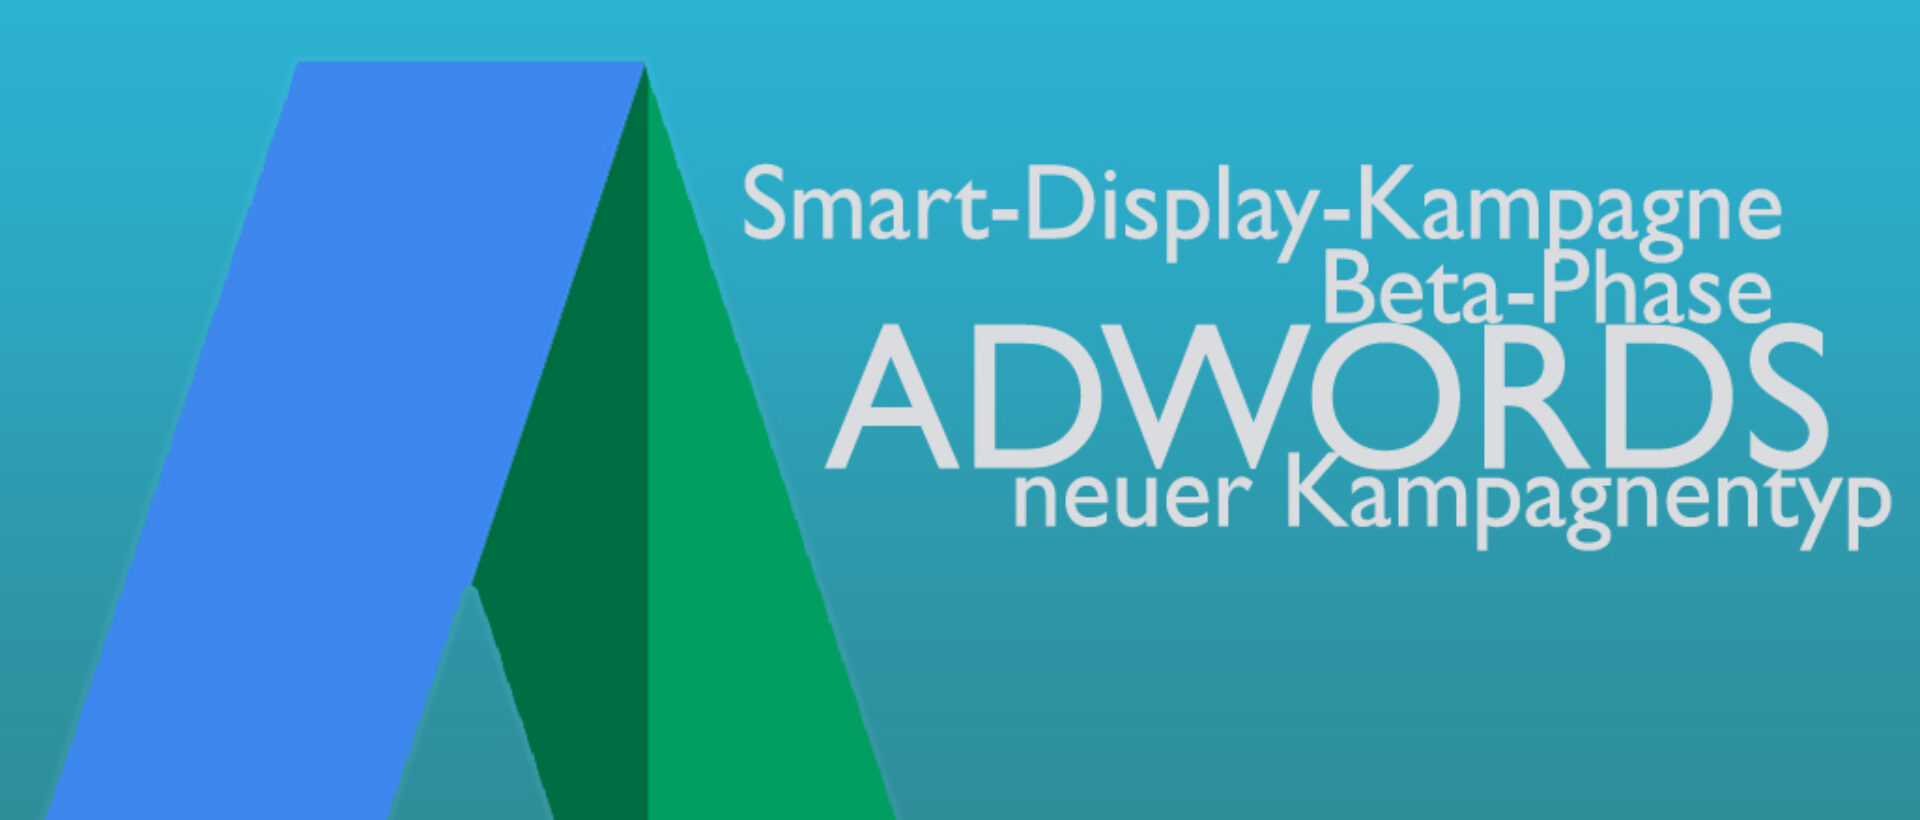 Titelbild Adwords Kampagnentyp Smart-Display-Kampagne